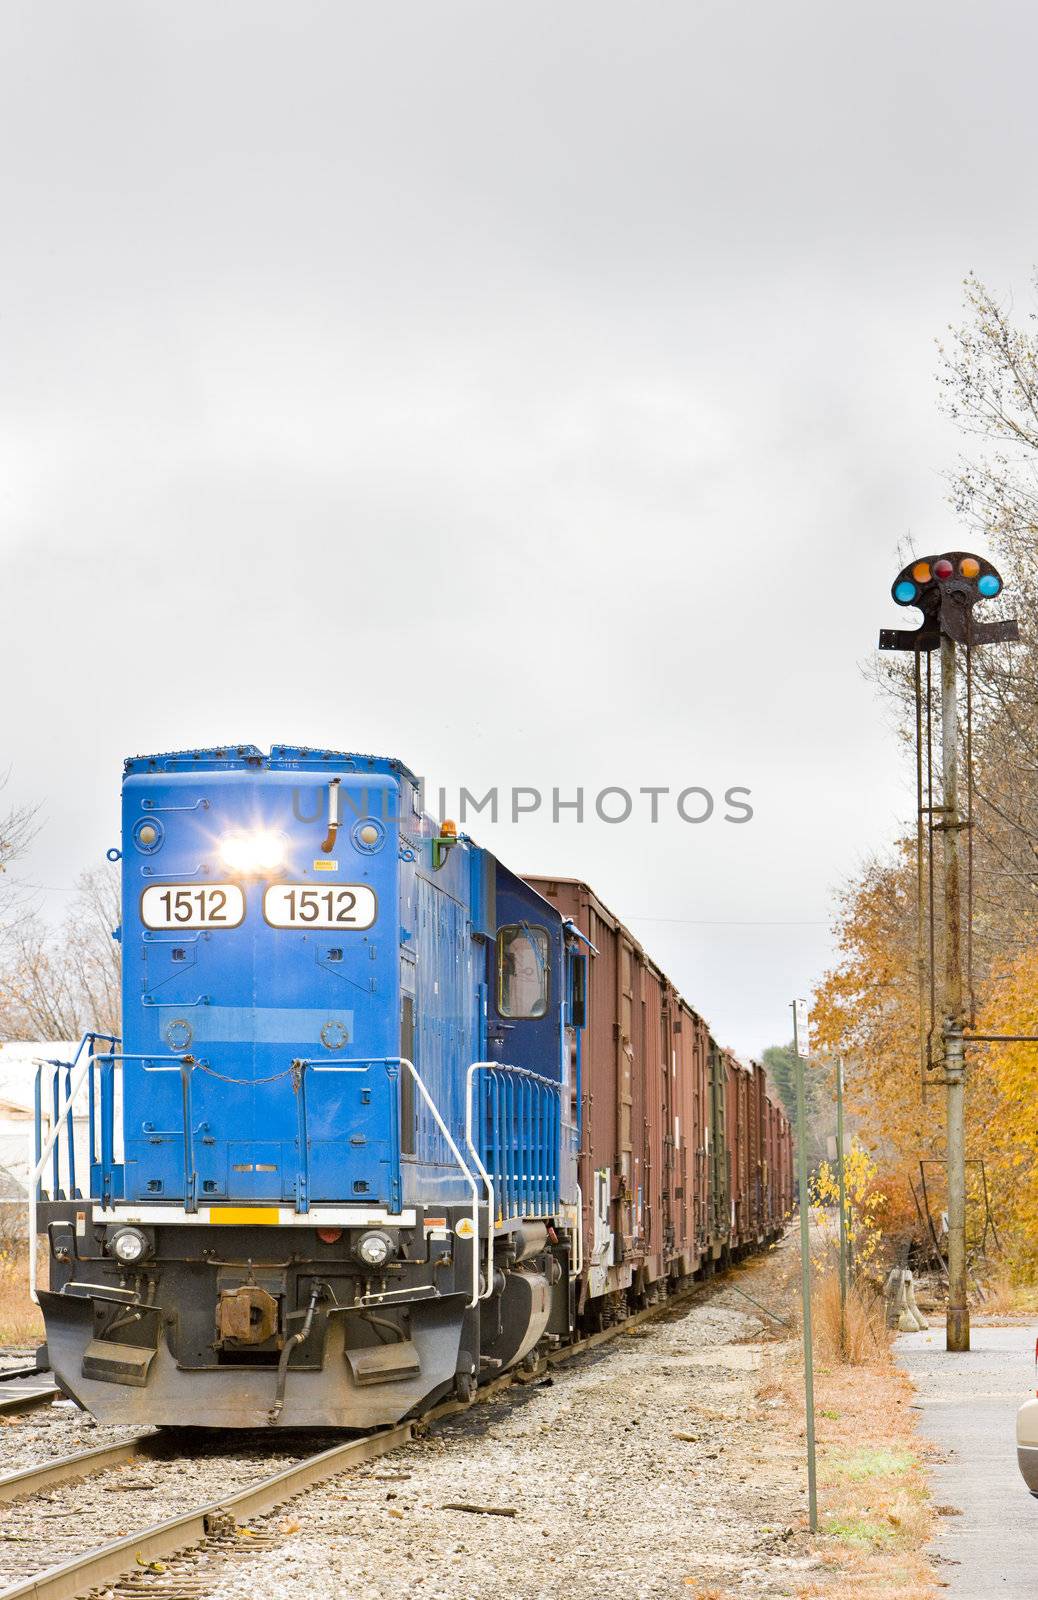 train with motor locomotive, South Paris, Maine, USA